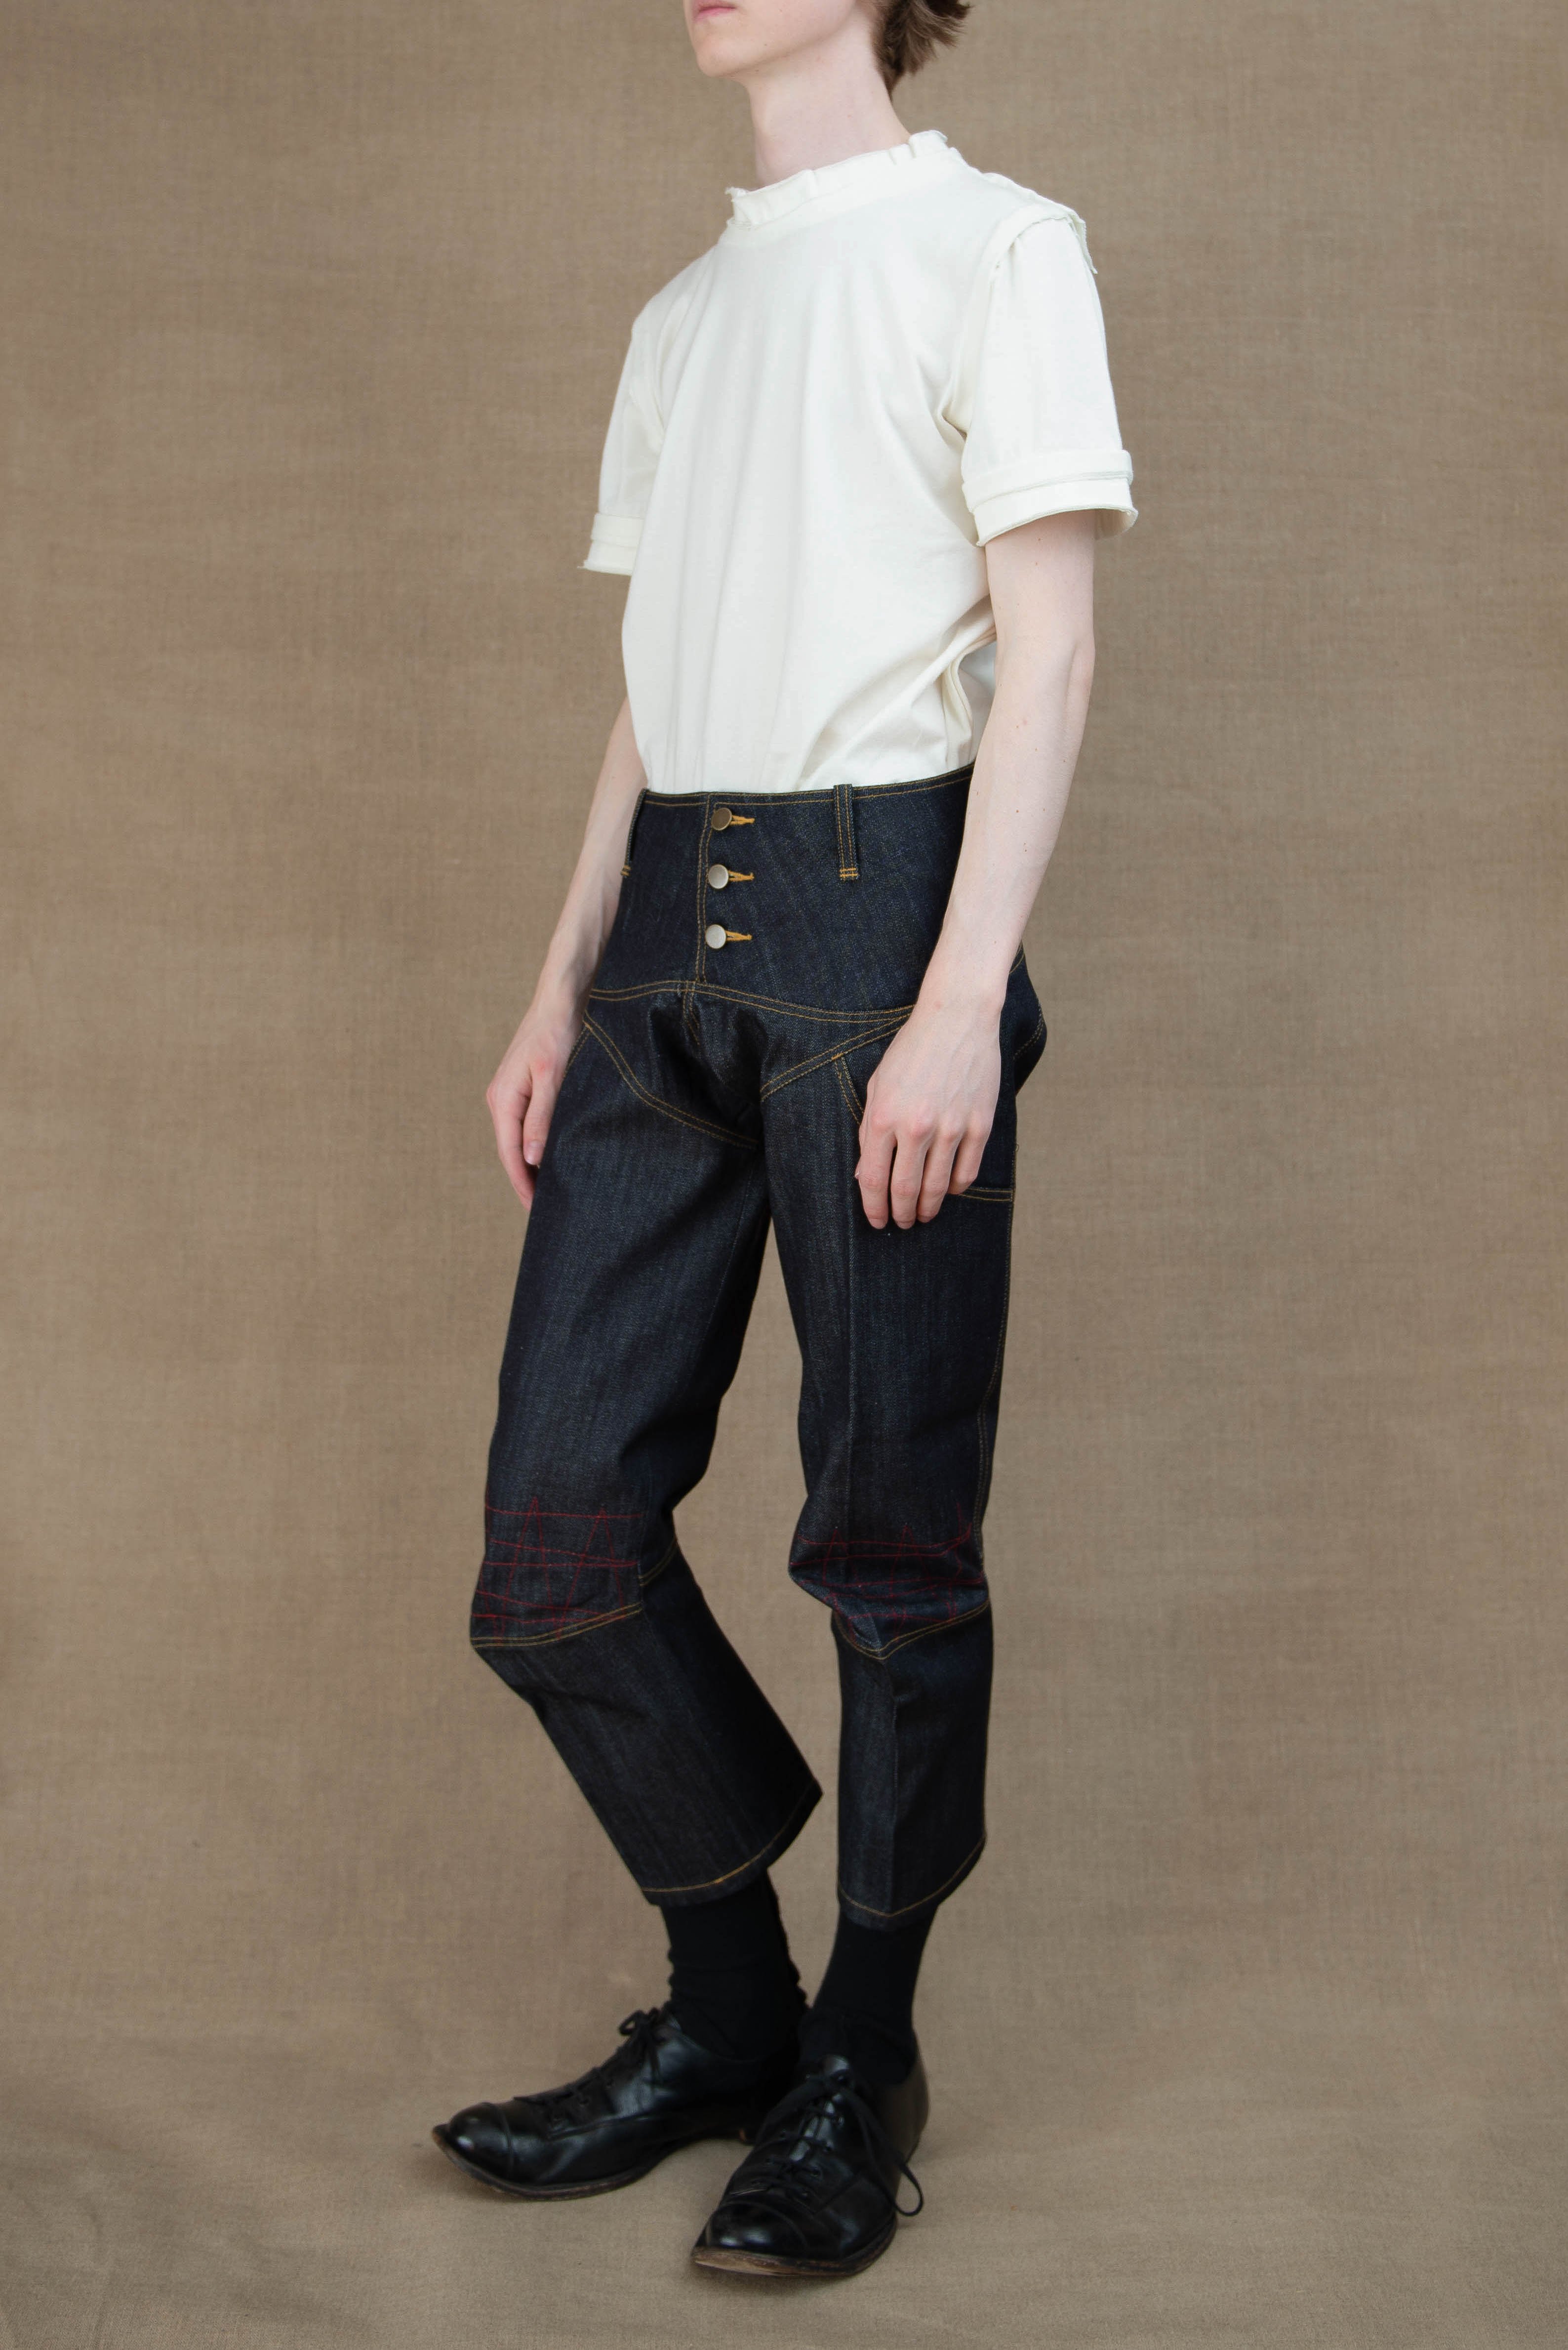 Trousers 21B- Wool100% Gabardine- Black